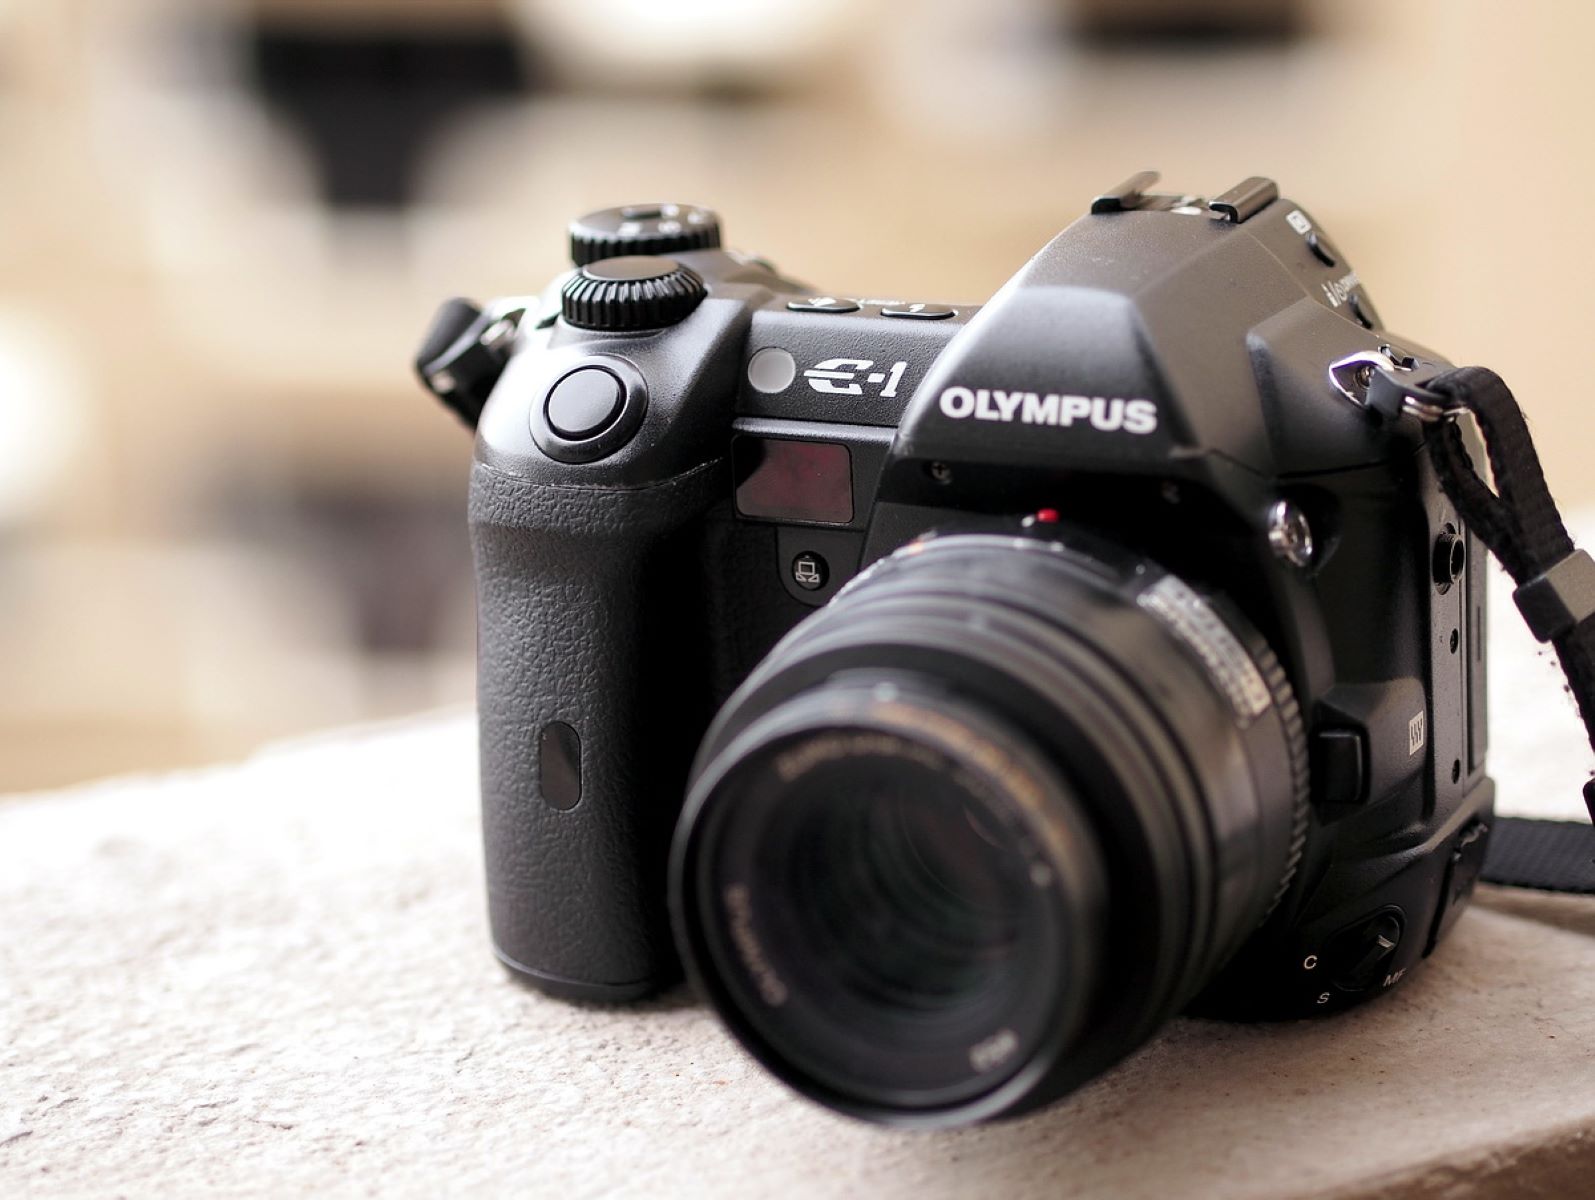 Olympus DSLR Camera That Can Use Older Lenses